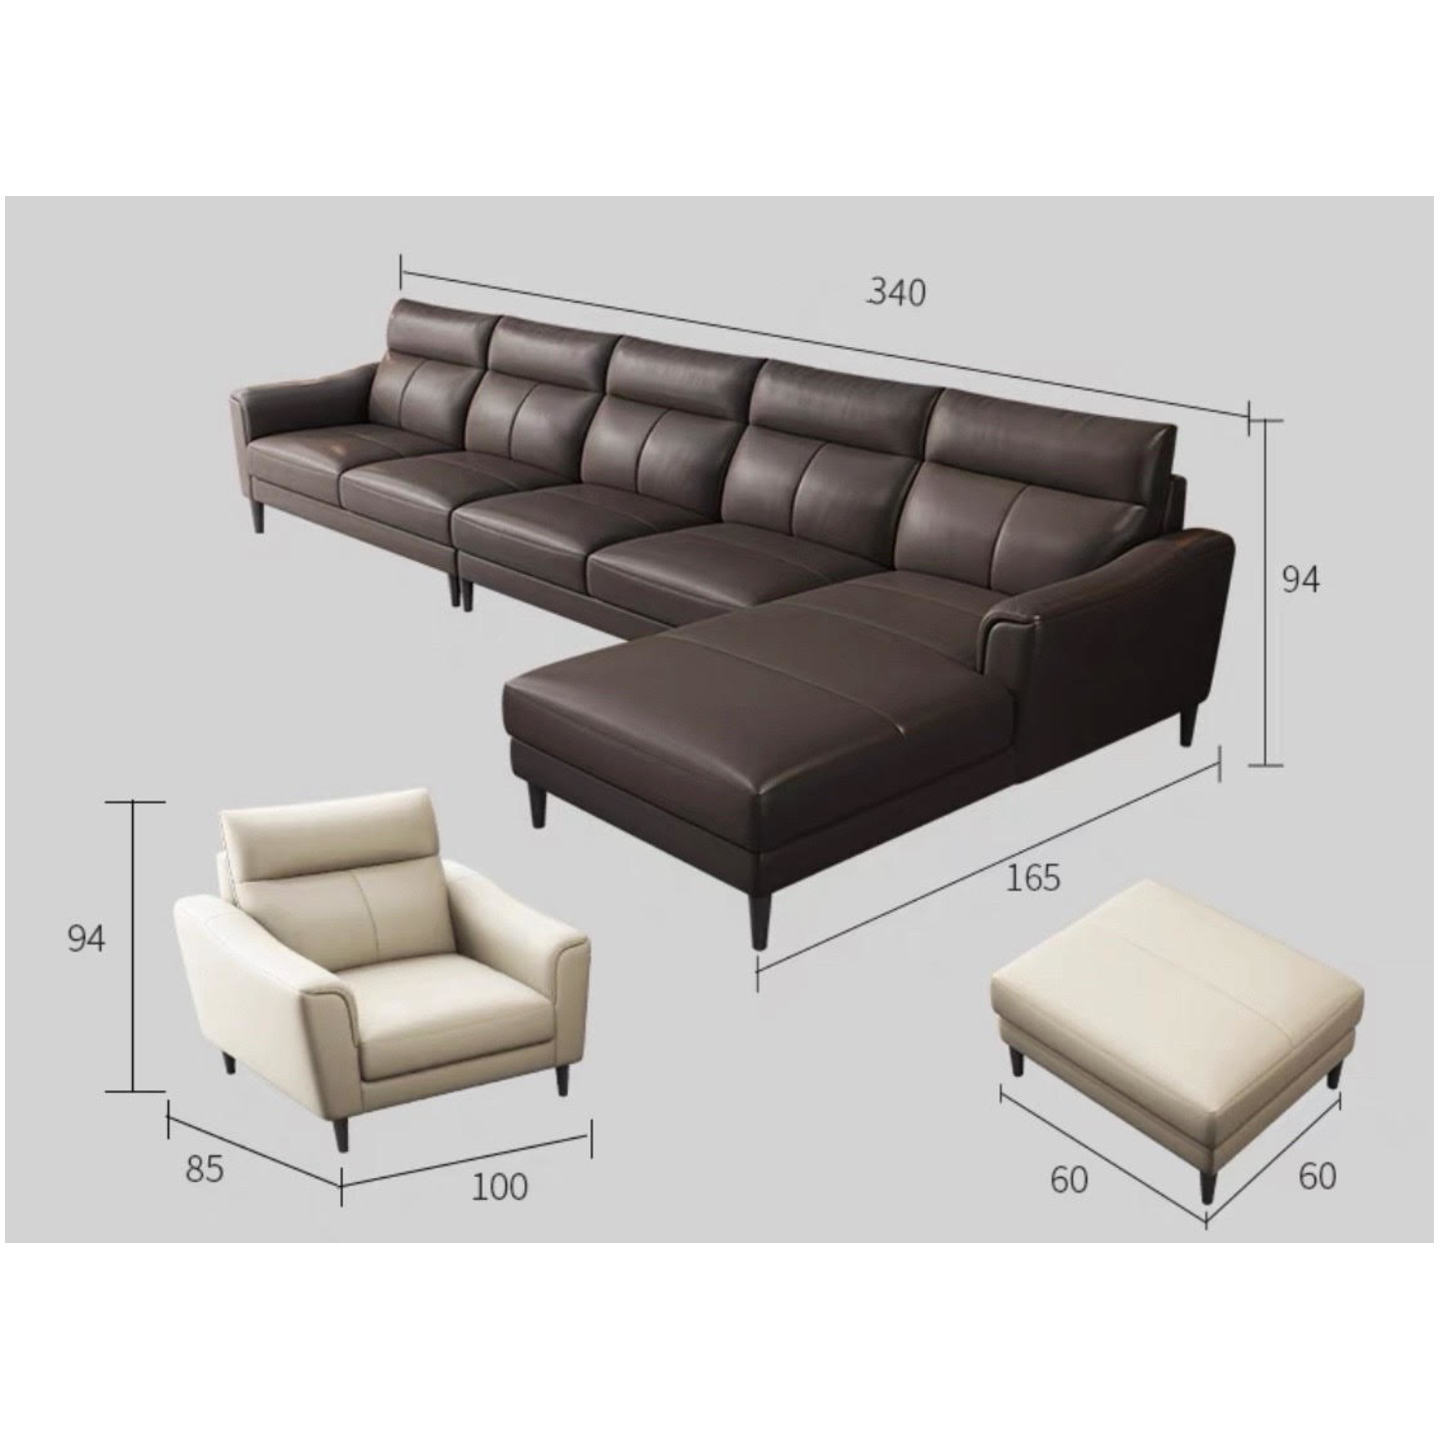 Nappa Premium Italian Sofa Contact Leather - Four + Concubine Seat + Single Seater + Leg Rest